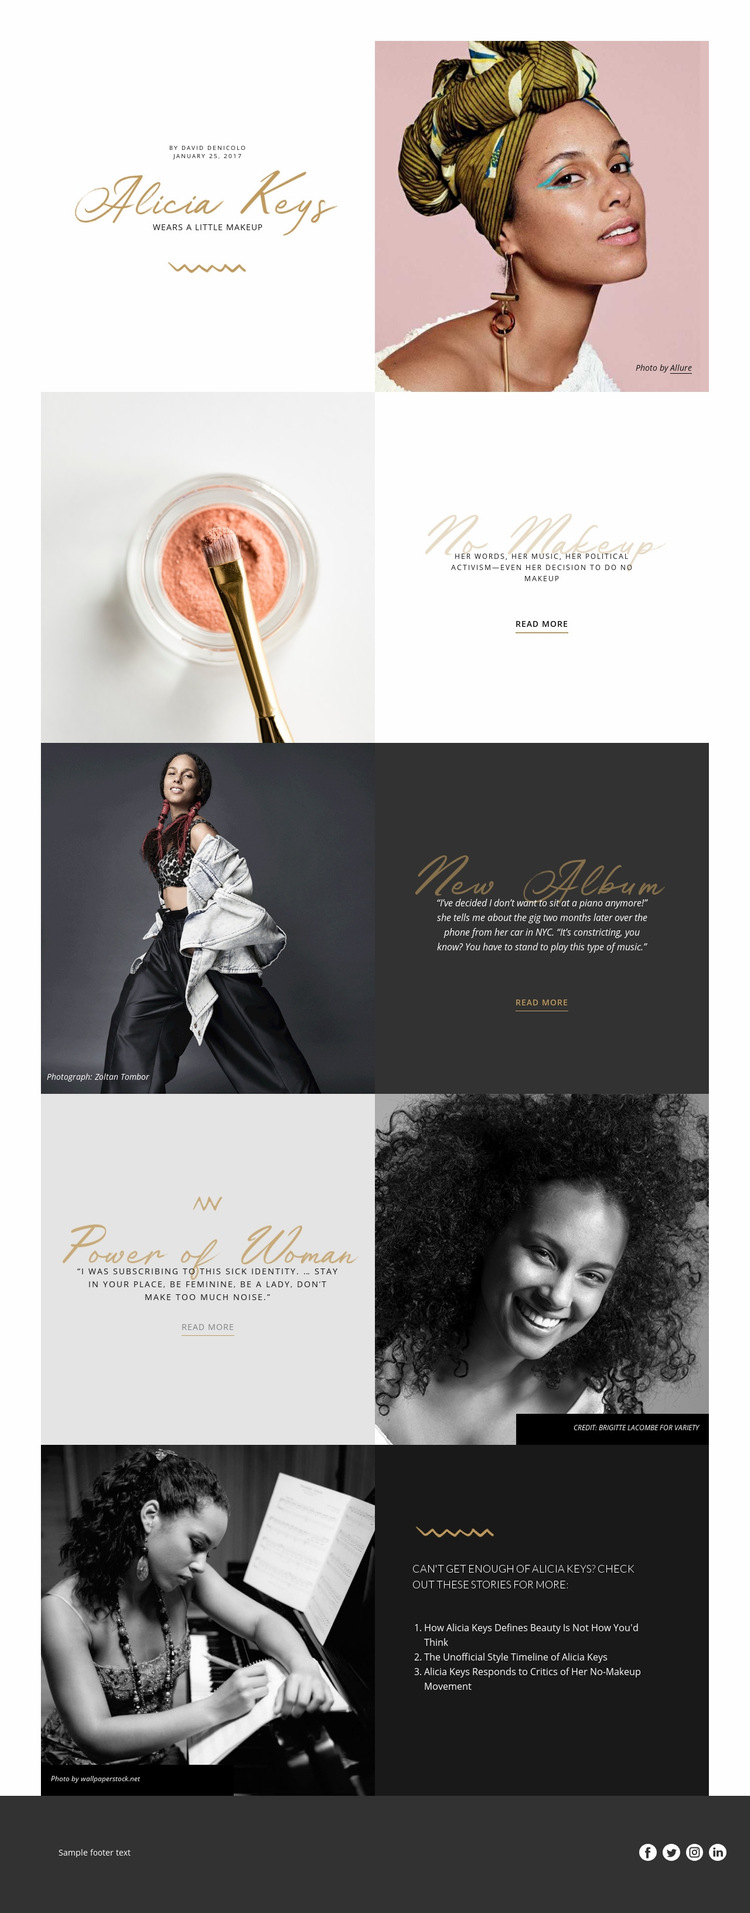 Alicia Keys Web Page Design